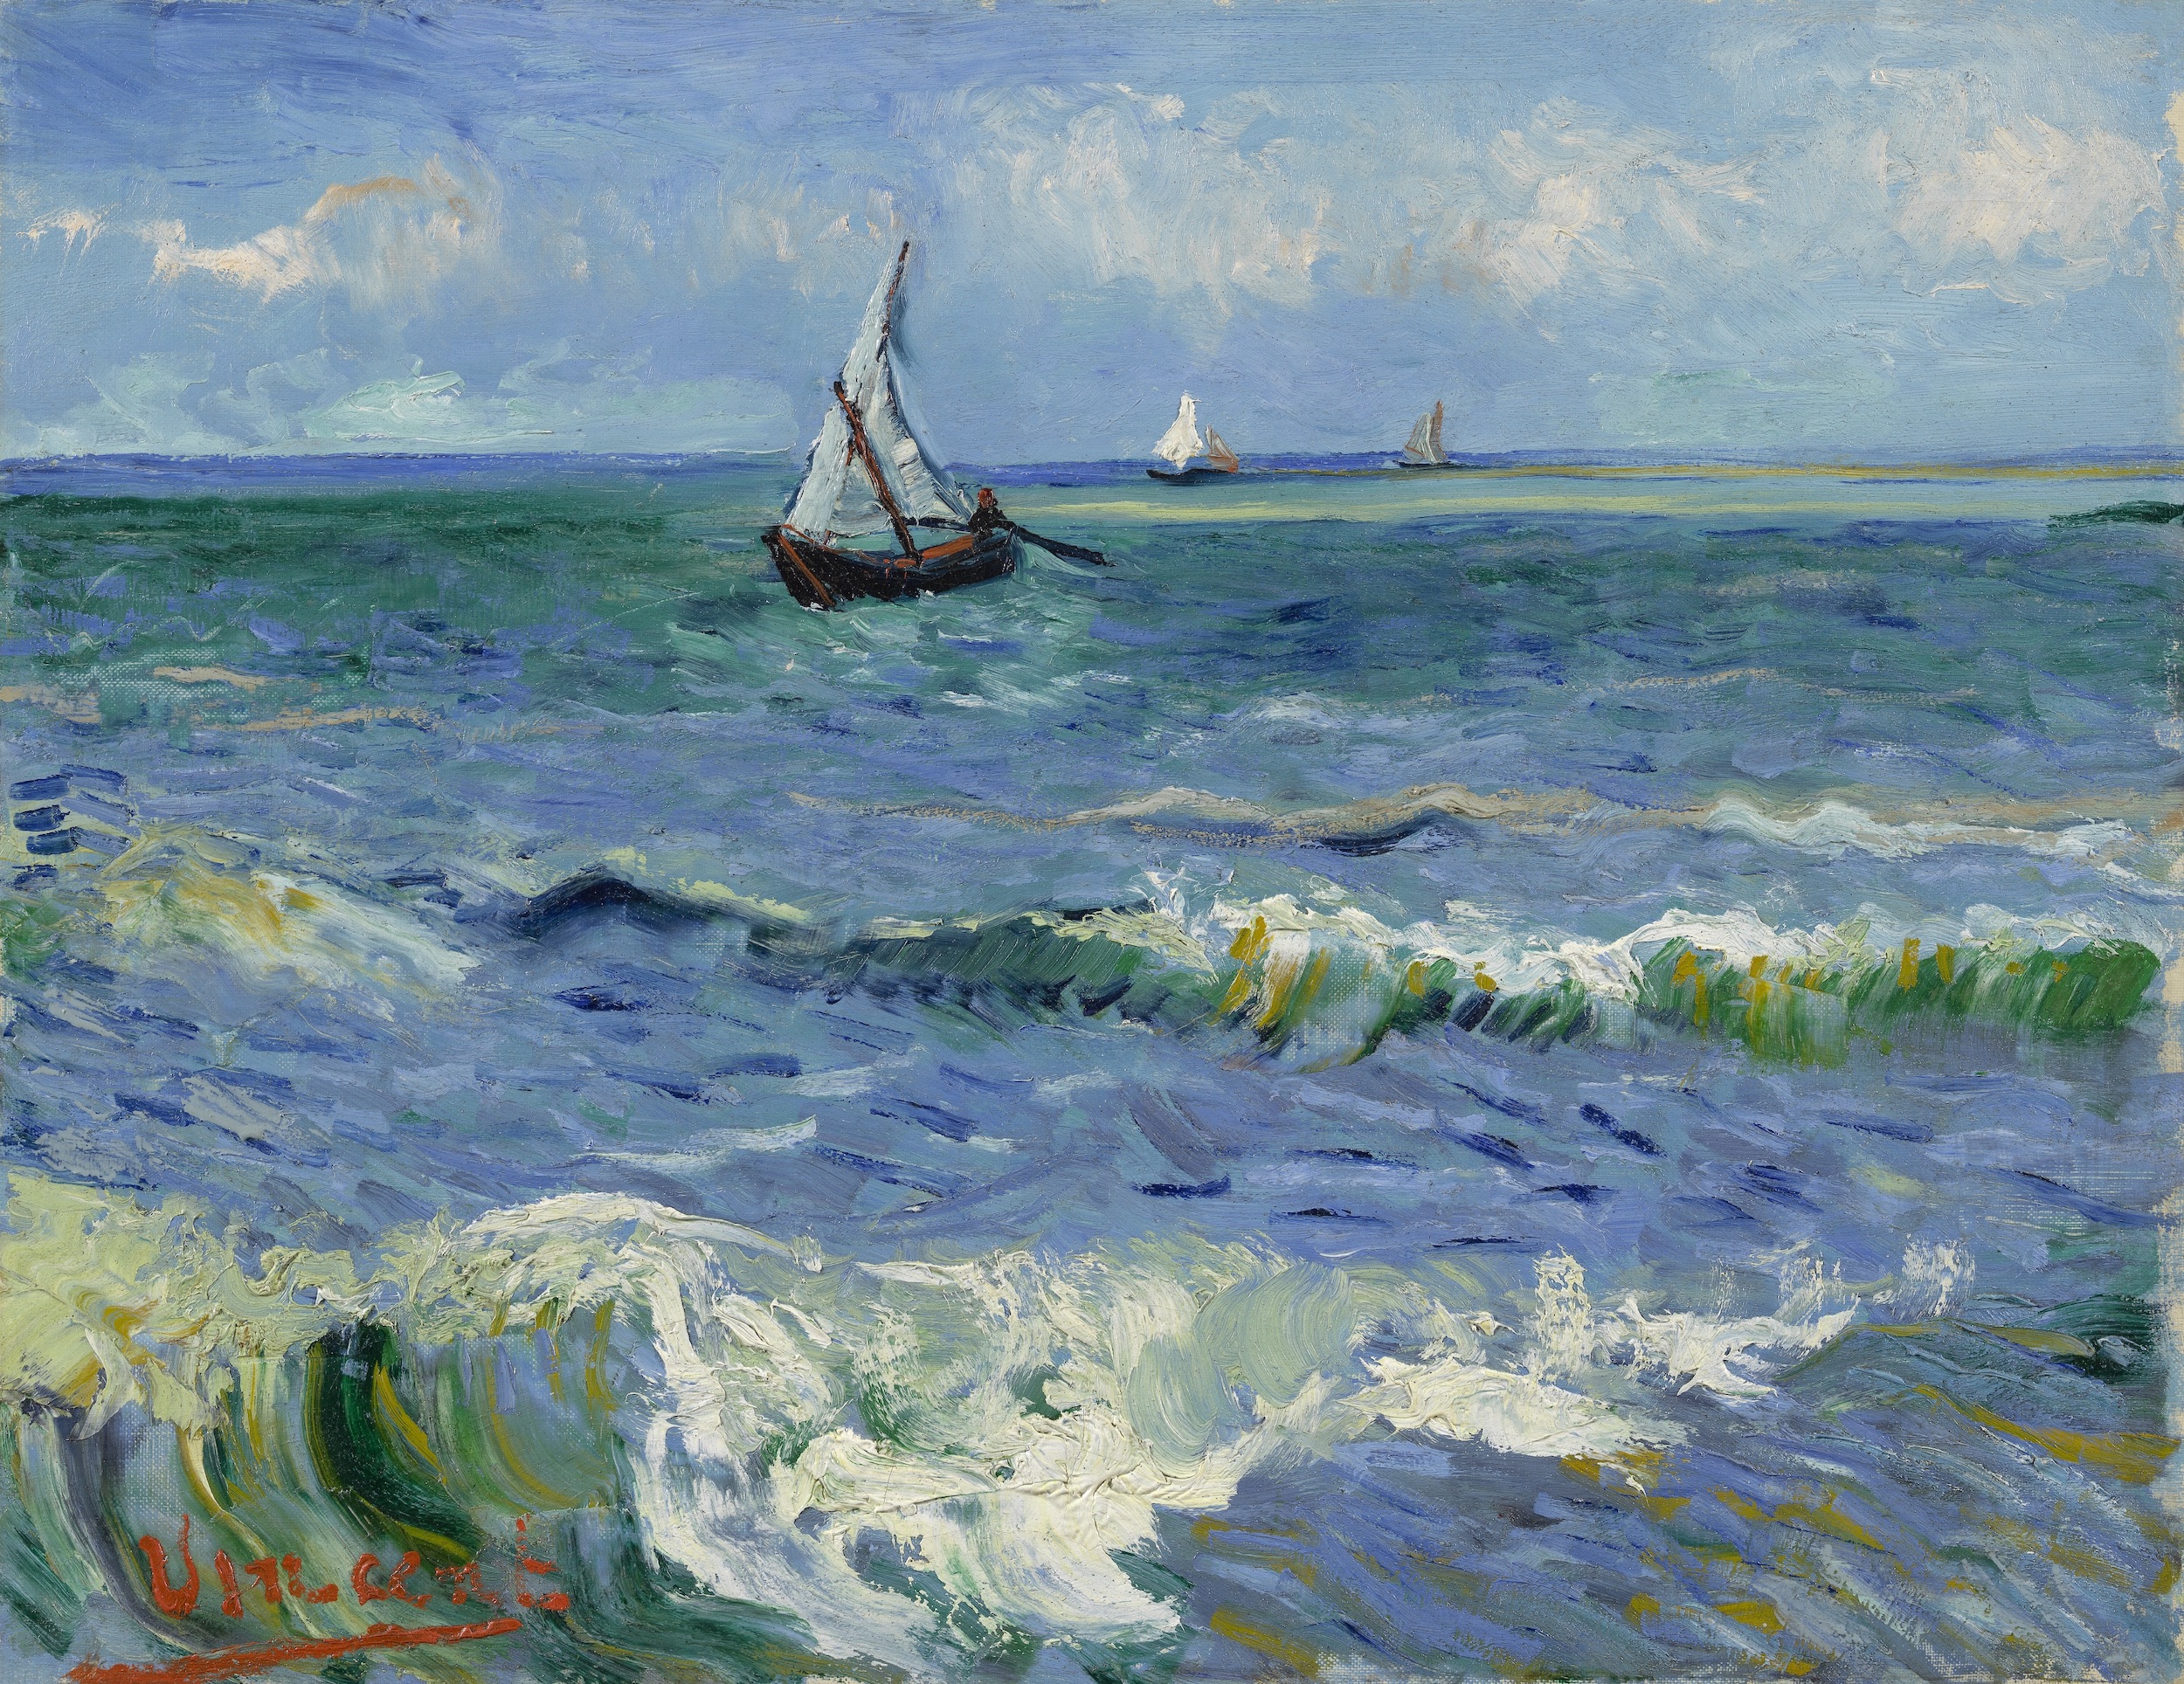 Tengeri táj Les Saintes-Maries-de-la-Mer mellett by Vincent van Gogh - 1888 júniusa - 50,5 x 64,3 cm 